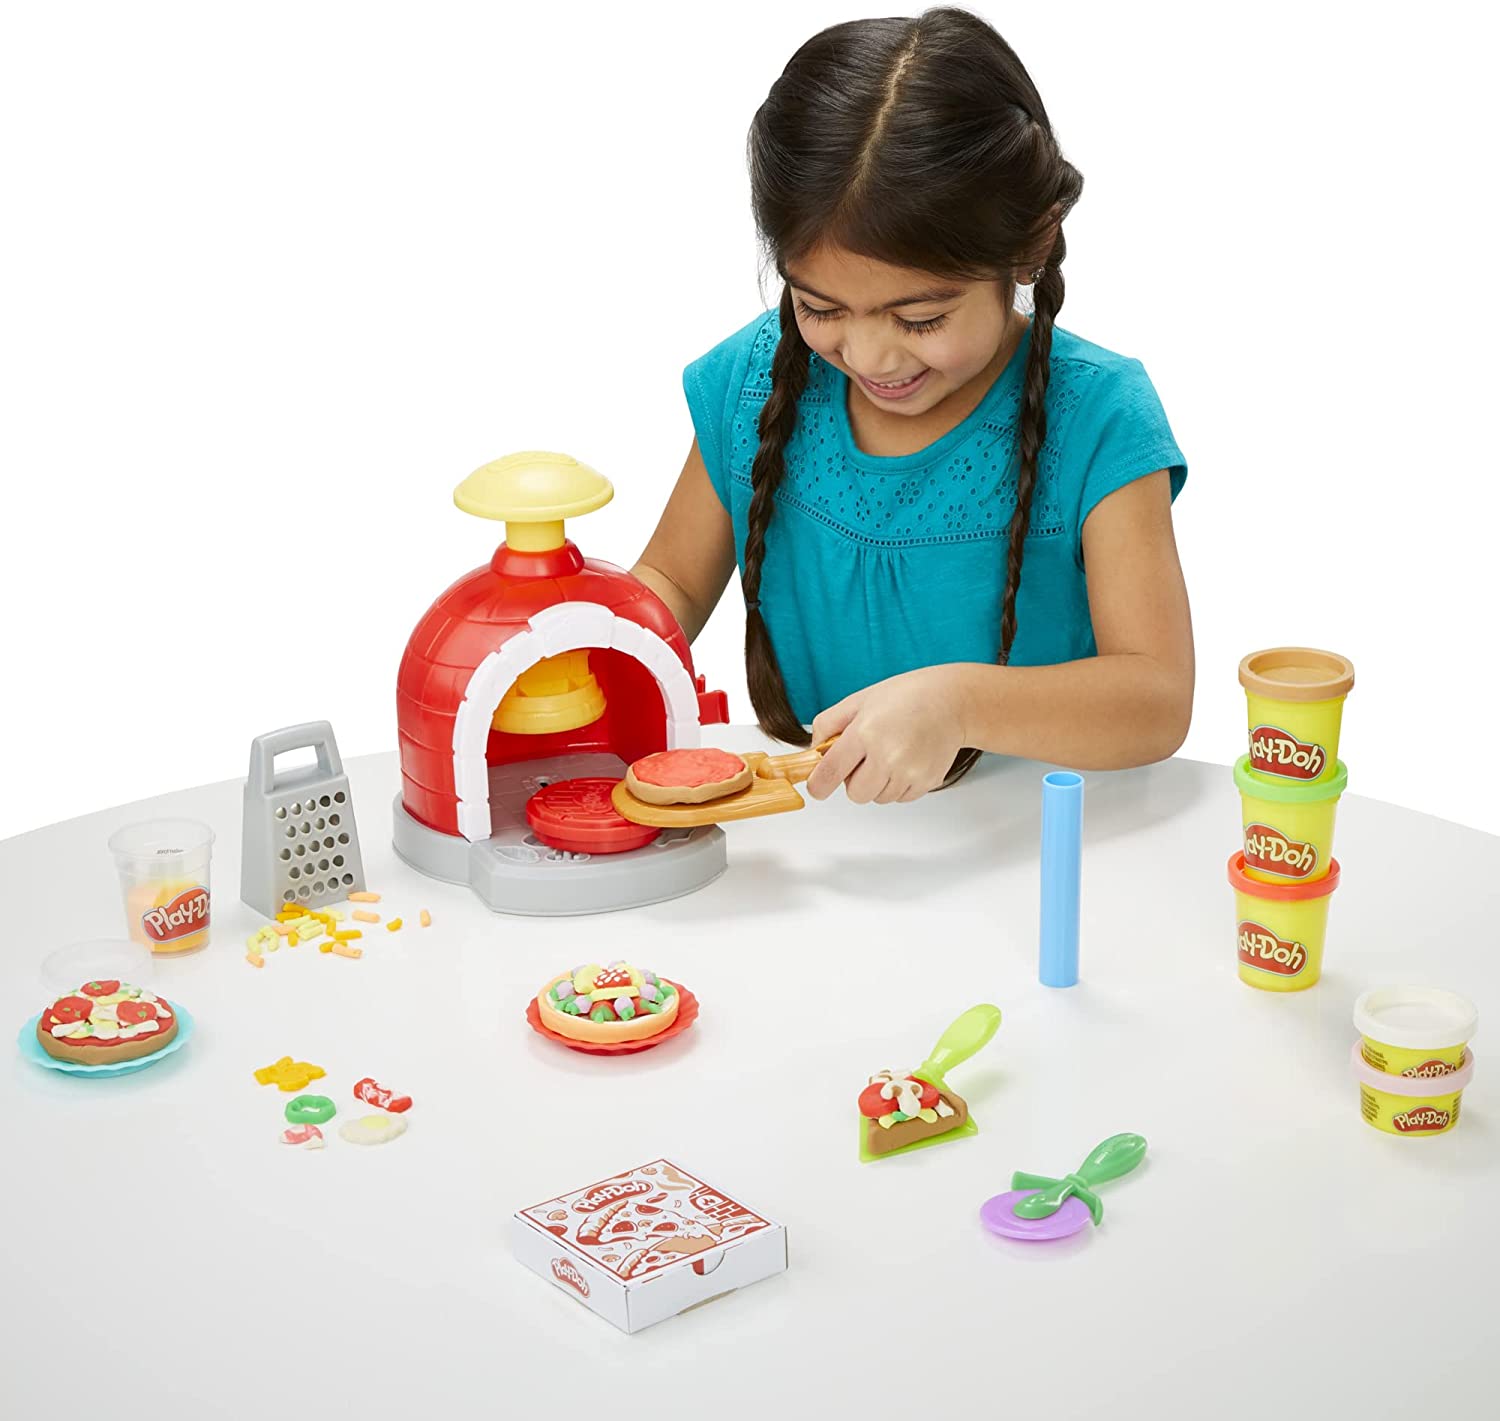 Hasbro - Play-Doh Pizza Oven Playset